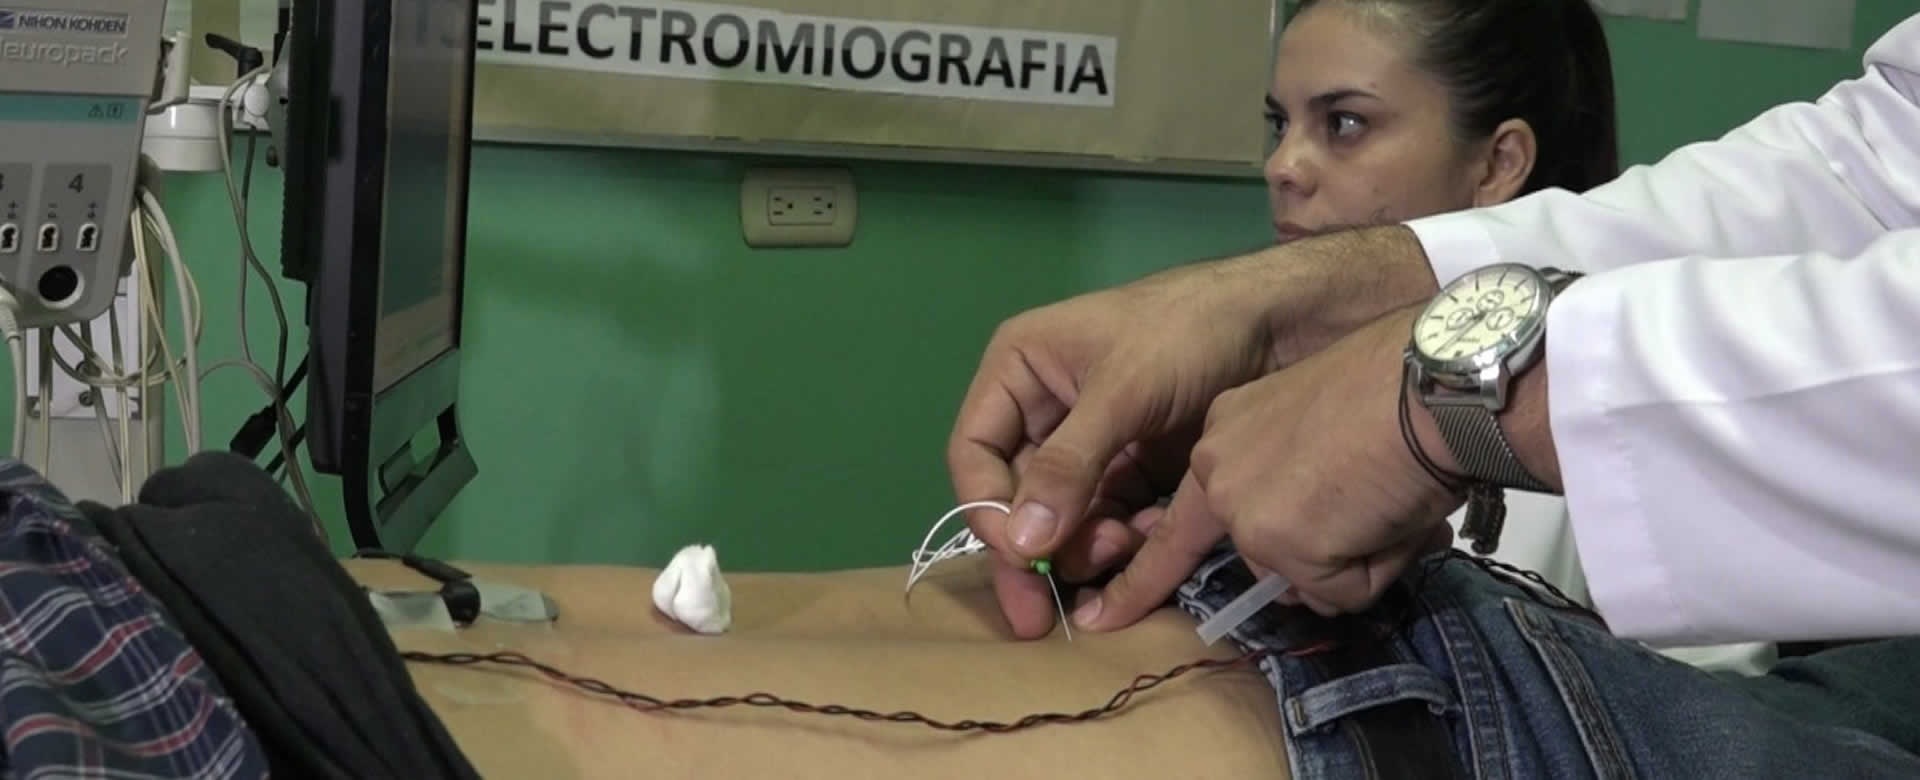 Nicaragüenses reciben exámenes de electromiografías gratuitos